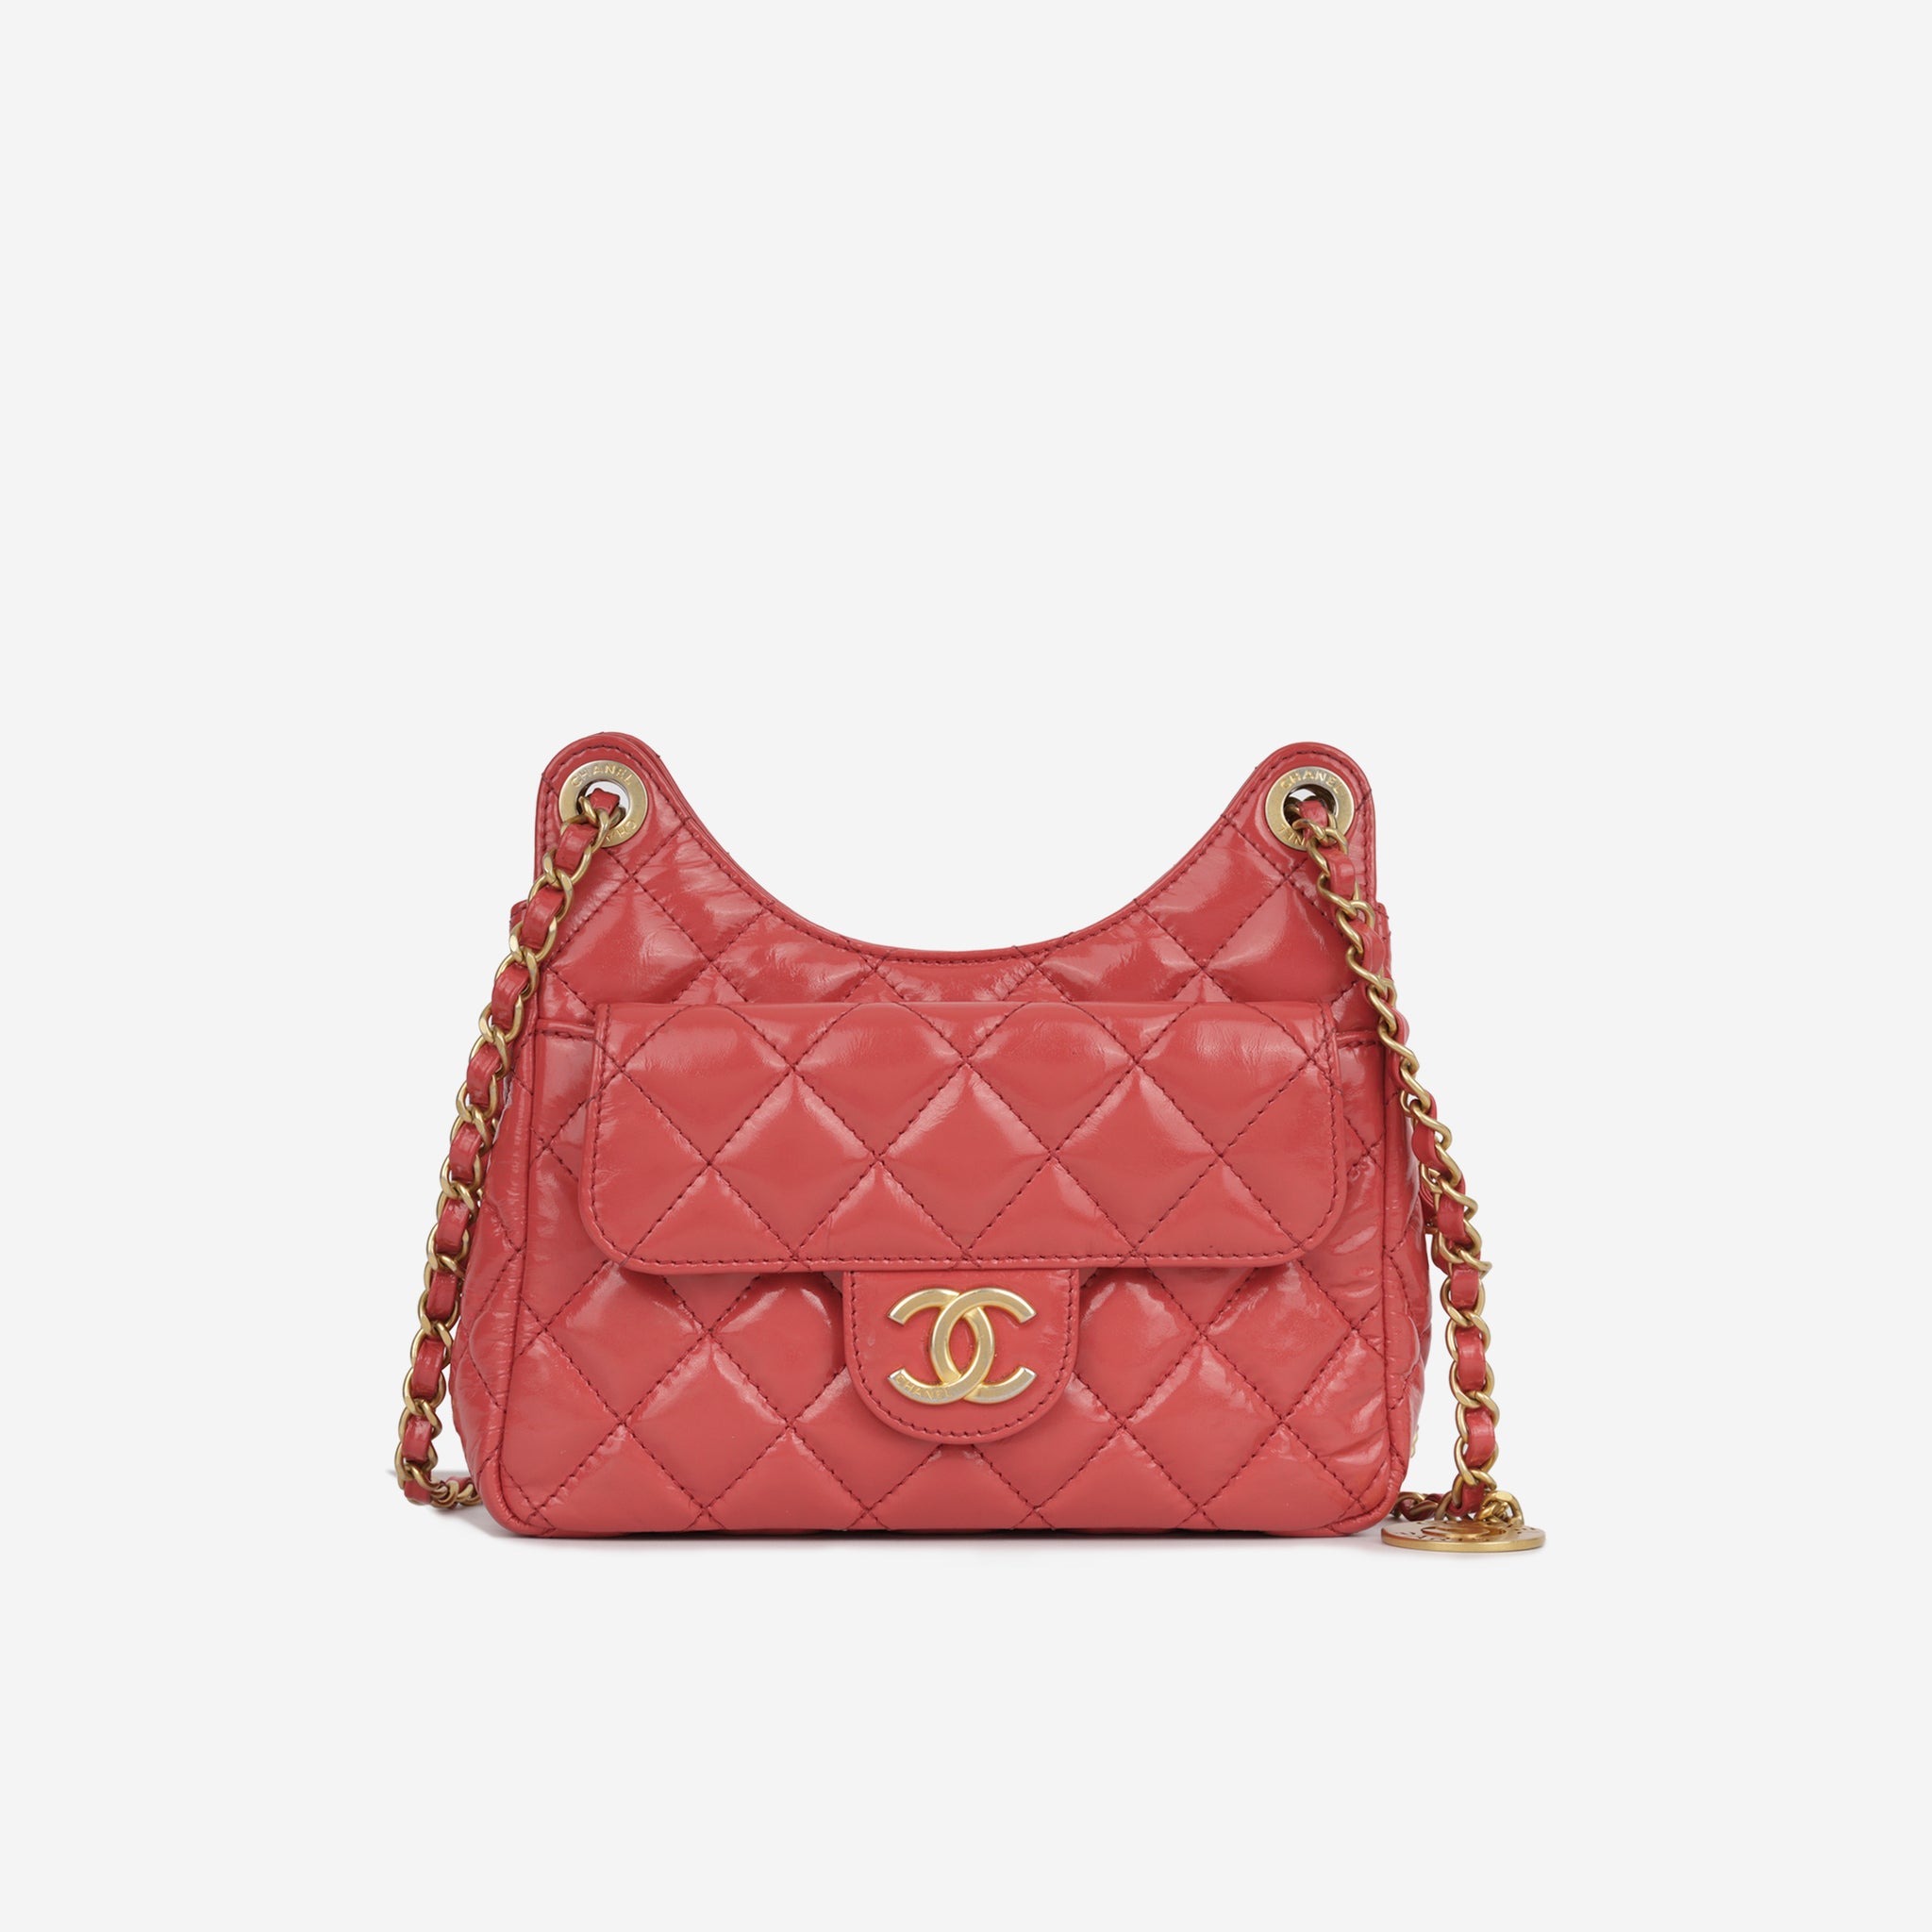 Chanel - Small Hobo Bag - Coral Shiny Crumpled Calfskin - GHW